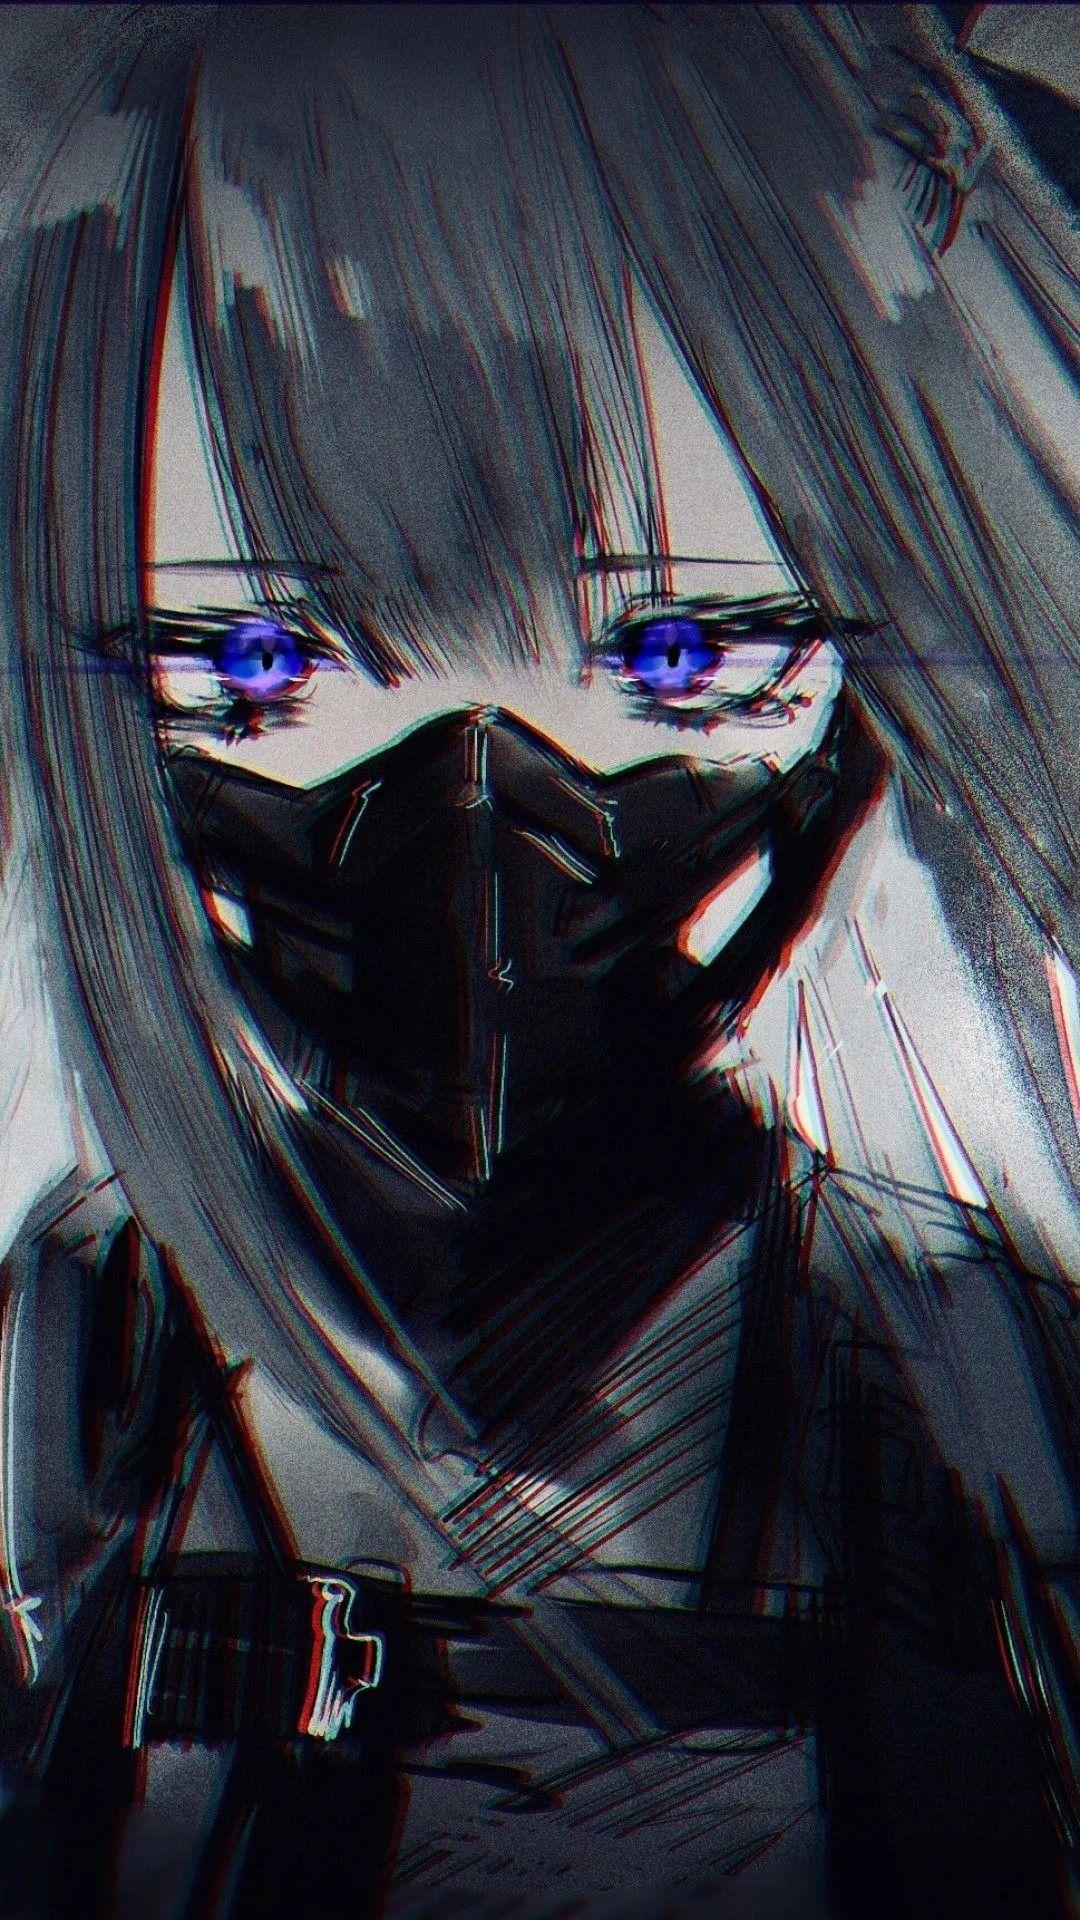 Kawaii Crying Sad Anime Girl Eyes  Poster for Sale by SpreadForSatan   Redbubble